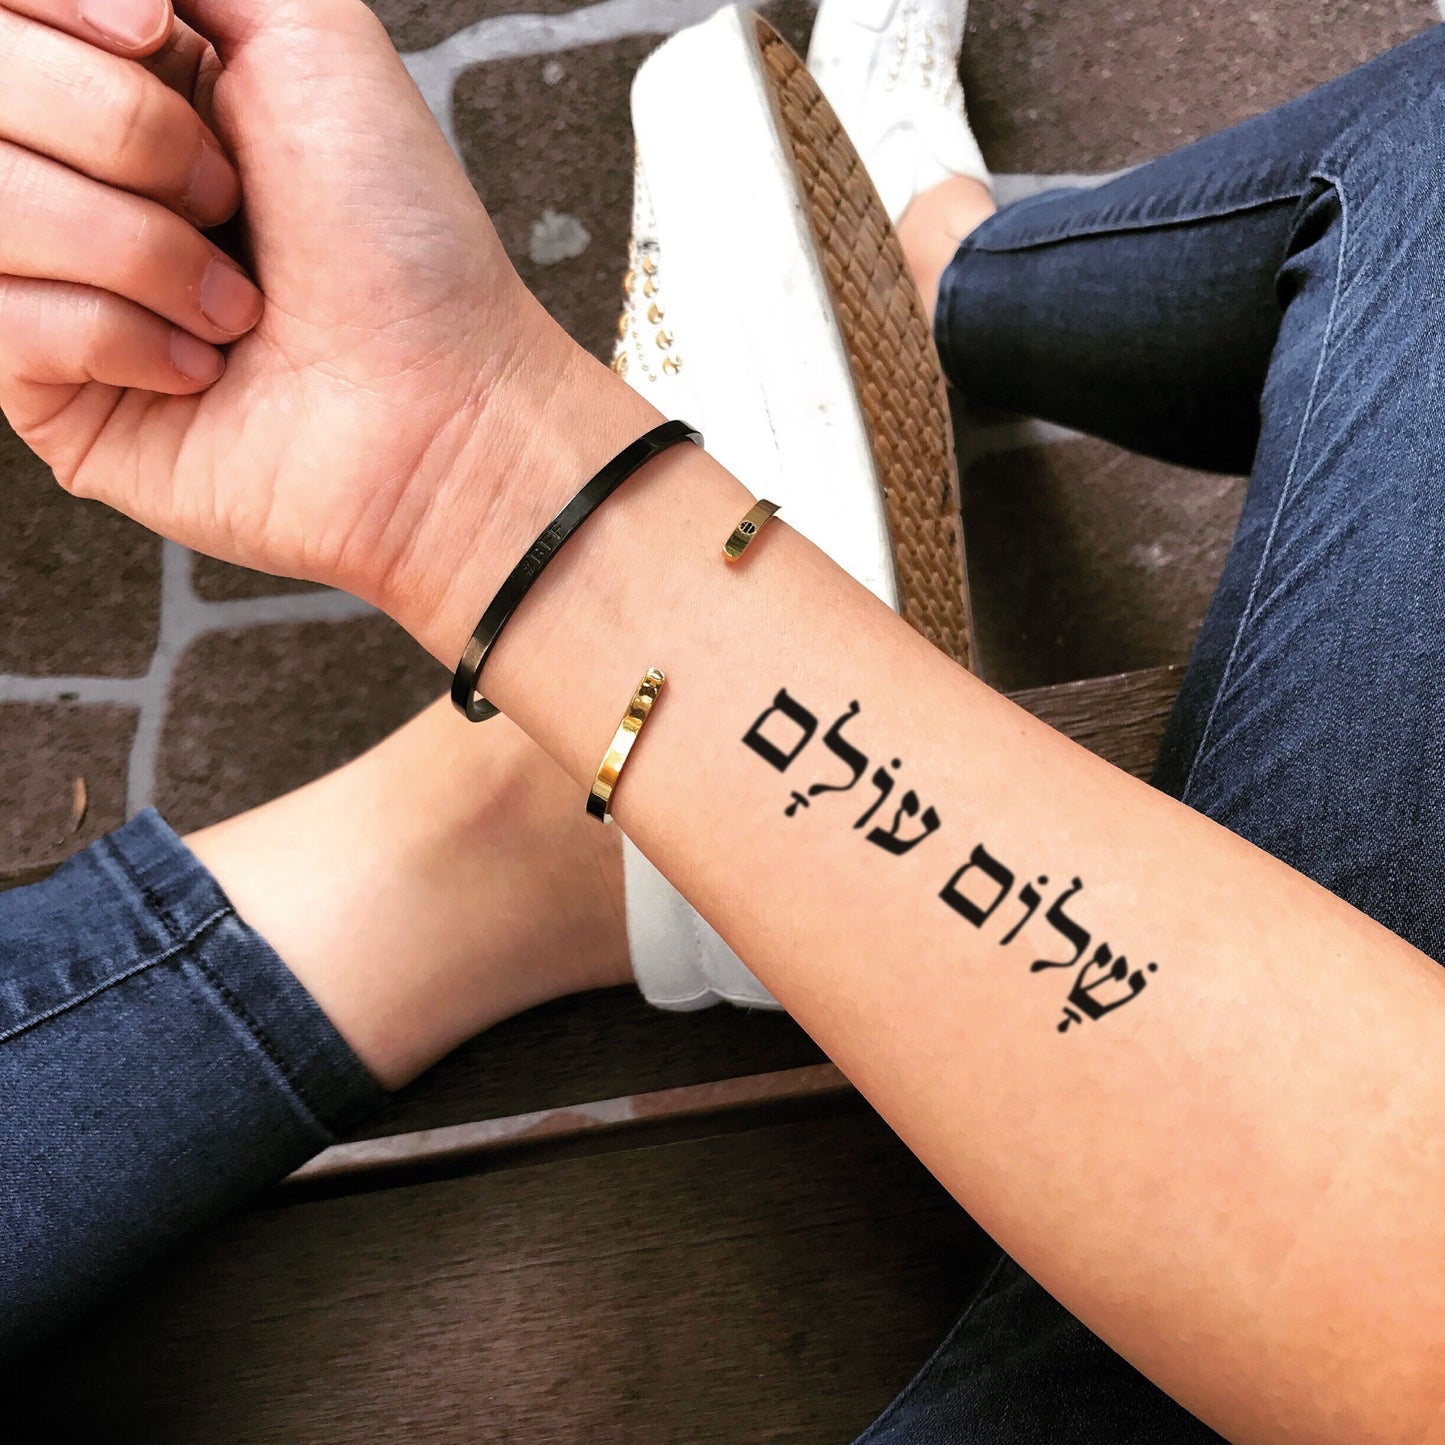 fake medium shalom tikkun olam hebrew top 10 lettering temporary tattoo sticker design idea on forearm